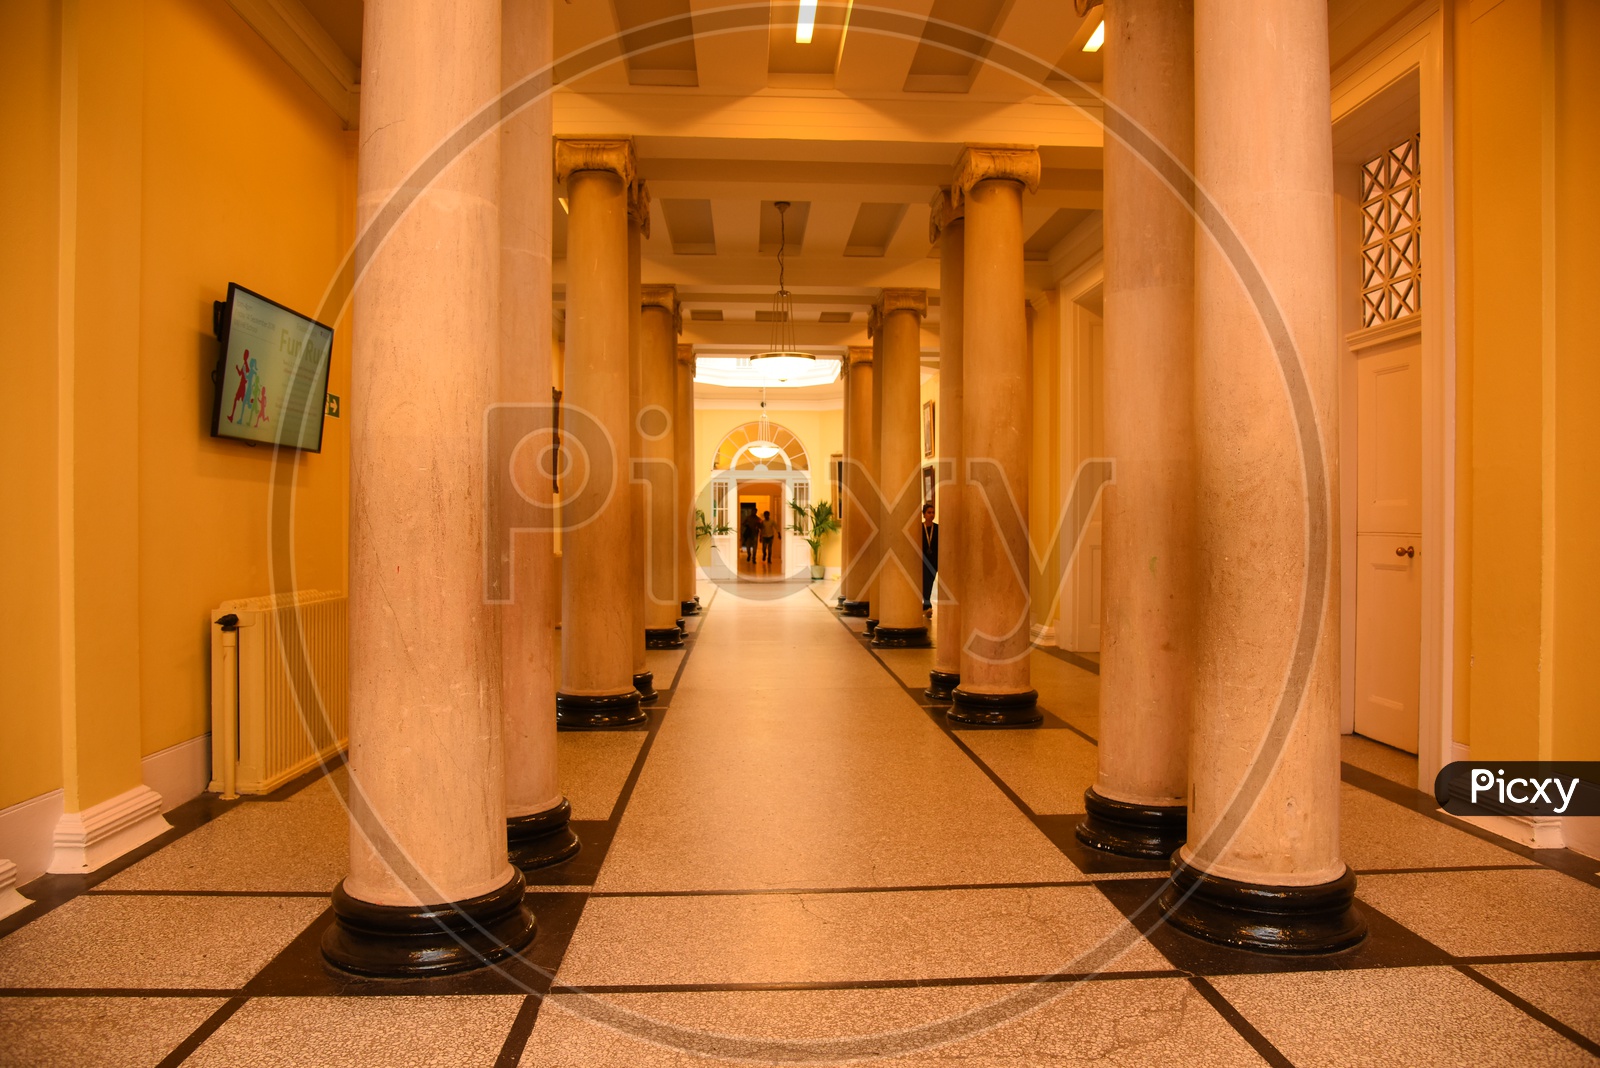 Corridor in a Hotel